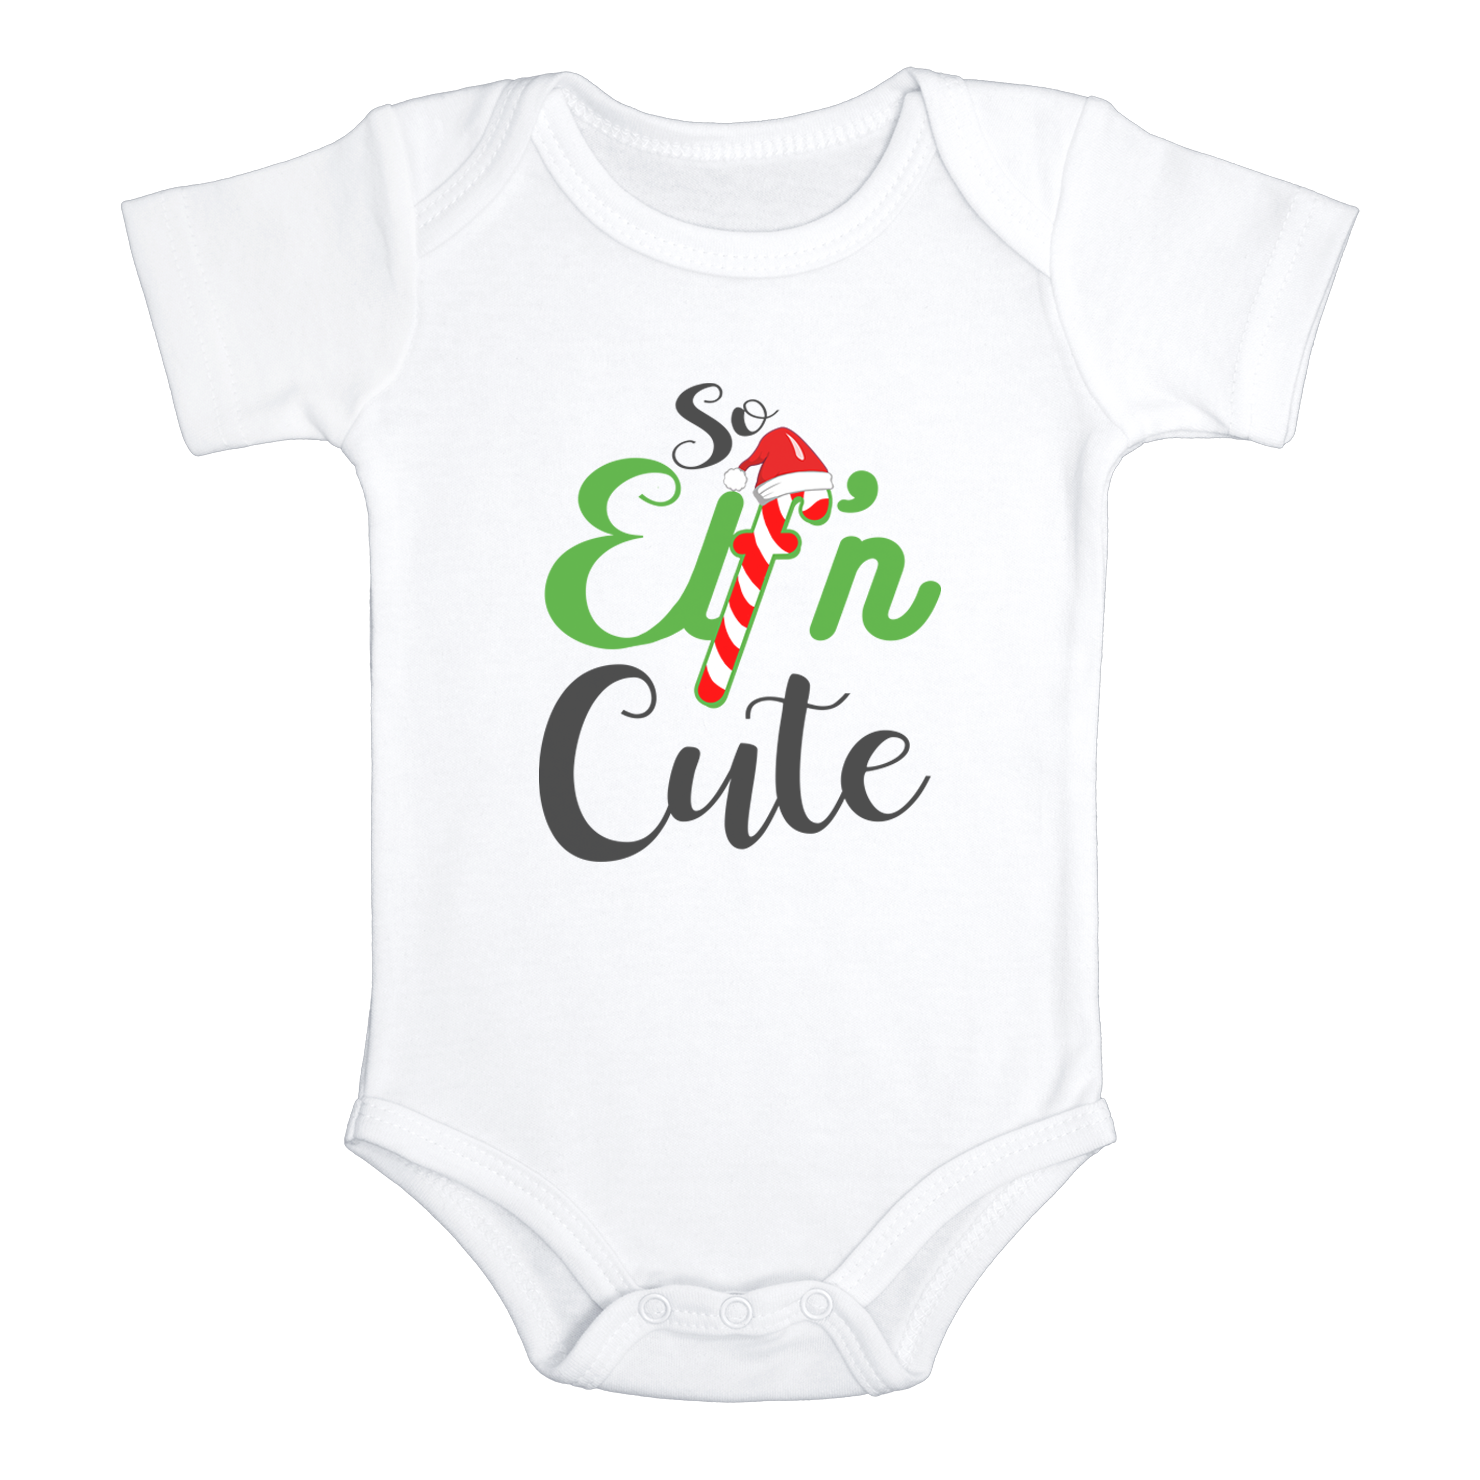 SO ELF'N CUTE Funny baby onesies Christmas bodysuit (white: short or long sleeve) - HappyAddition